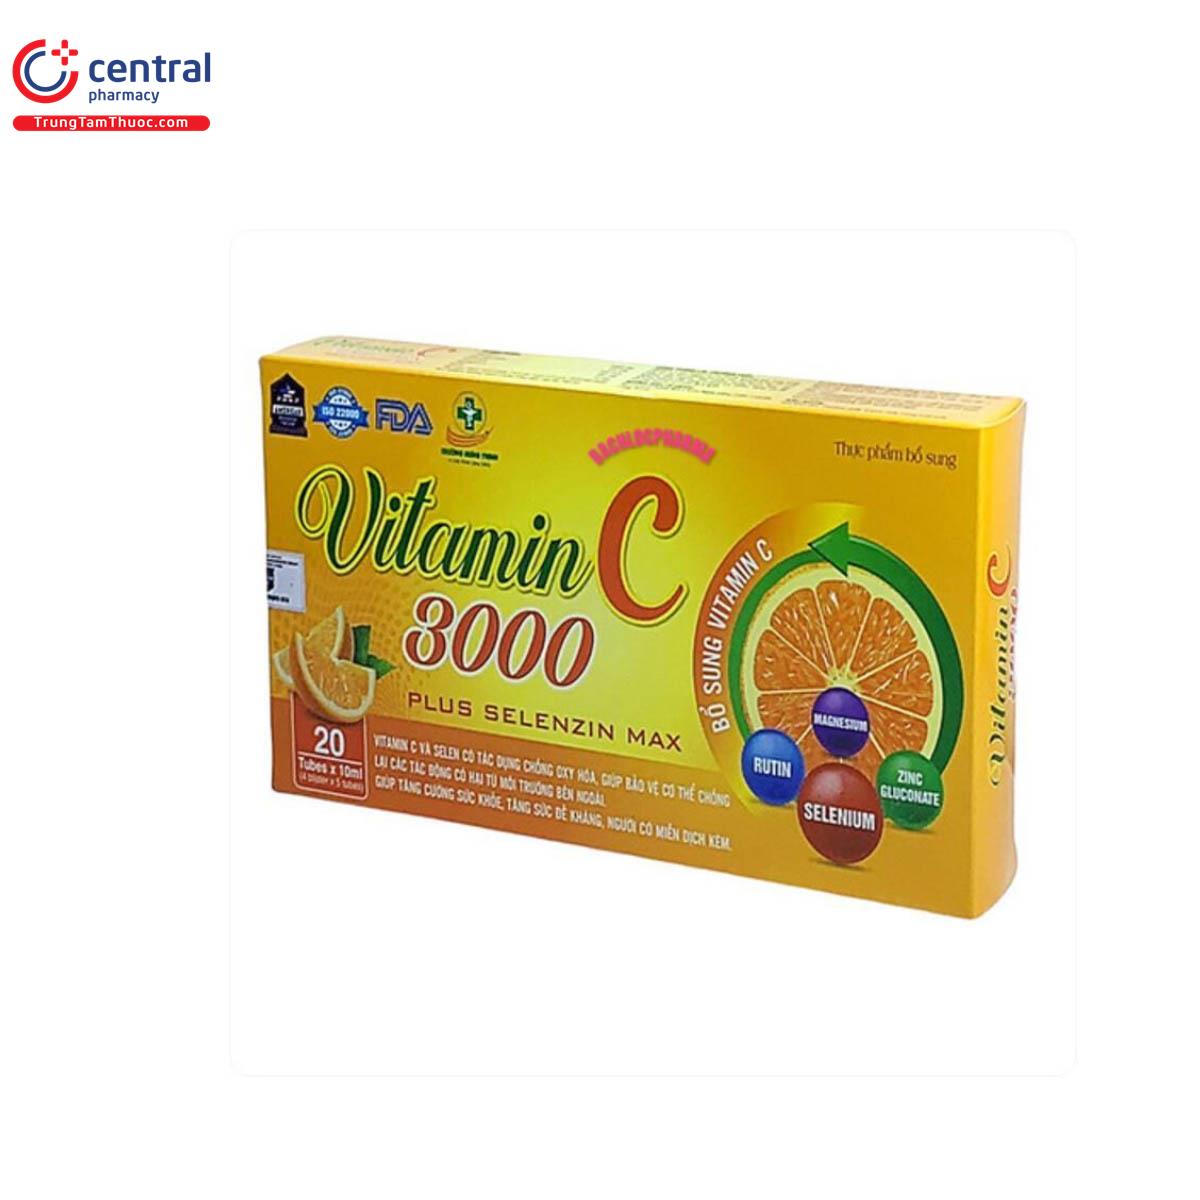 Vitamin C 3000 PLUS Selenzin Max